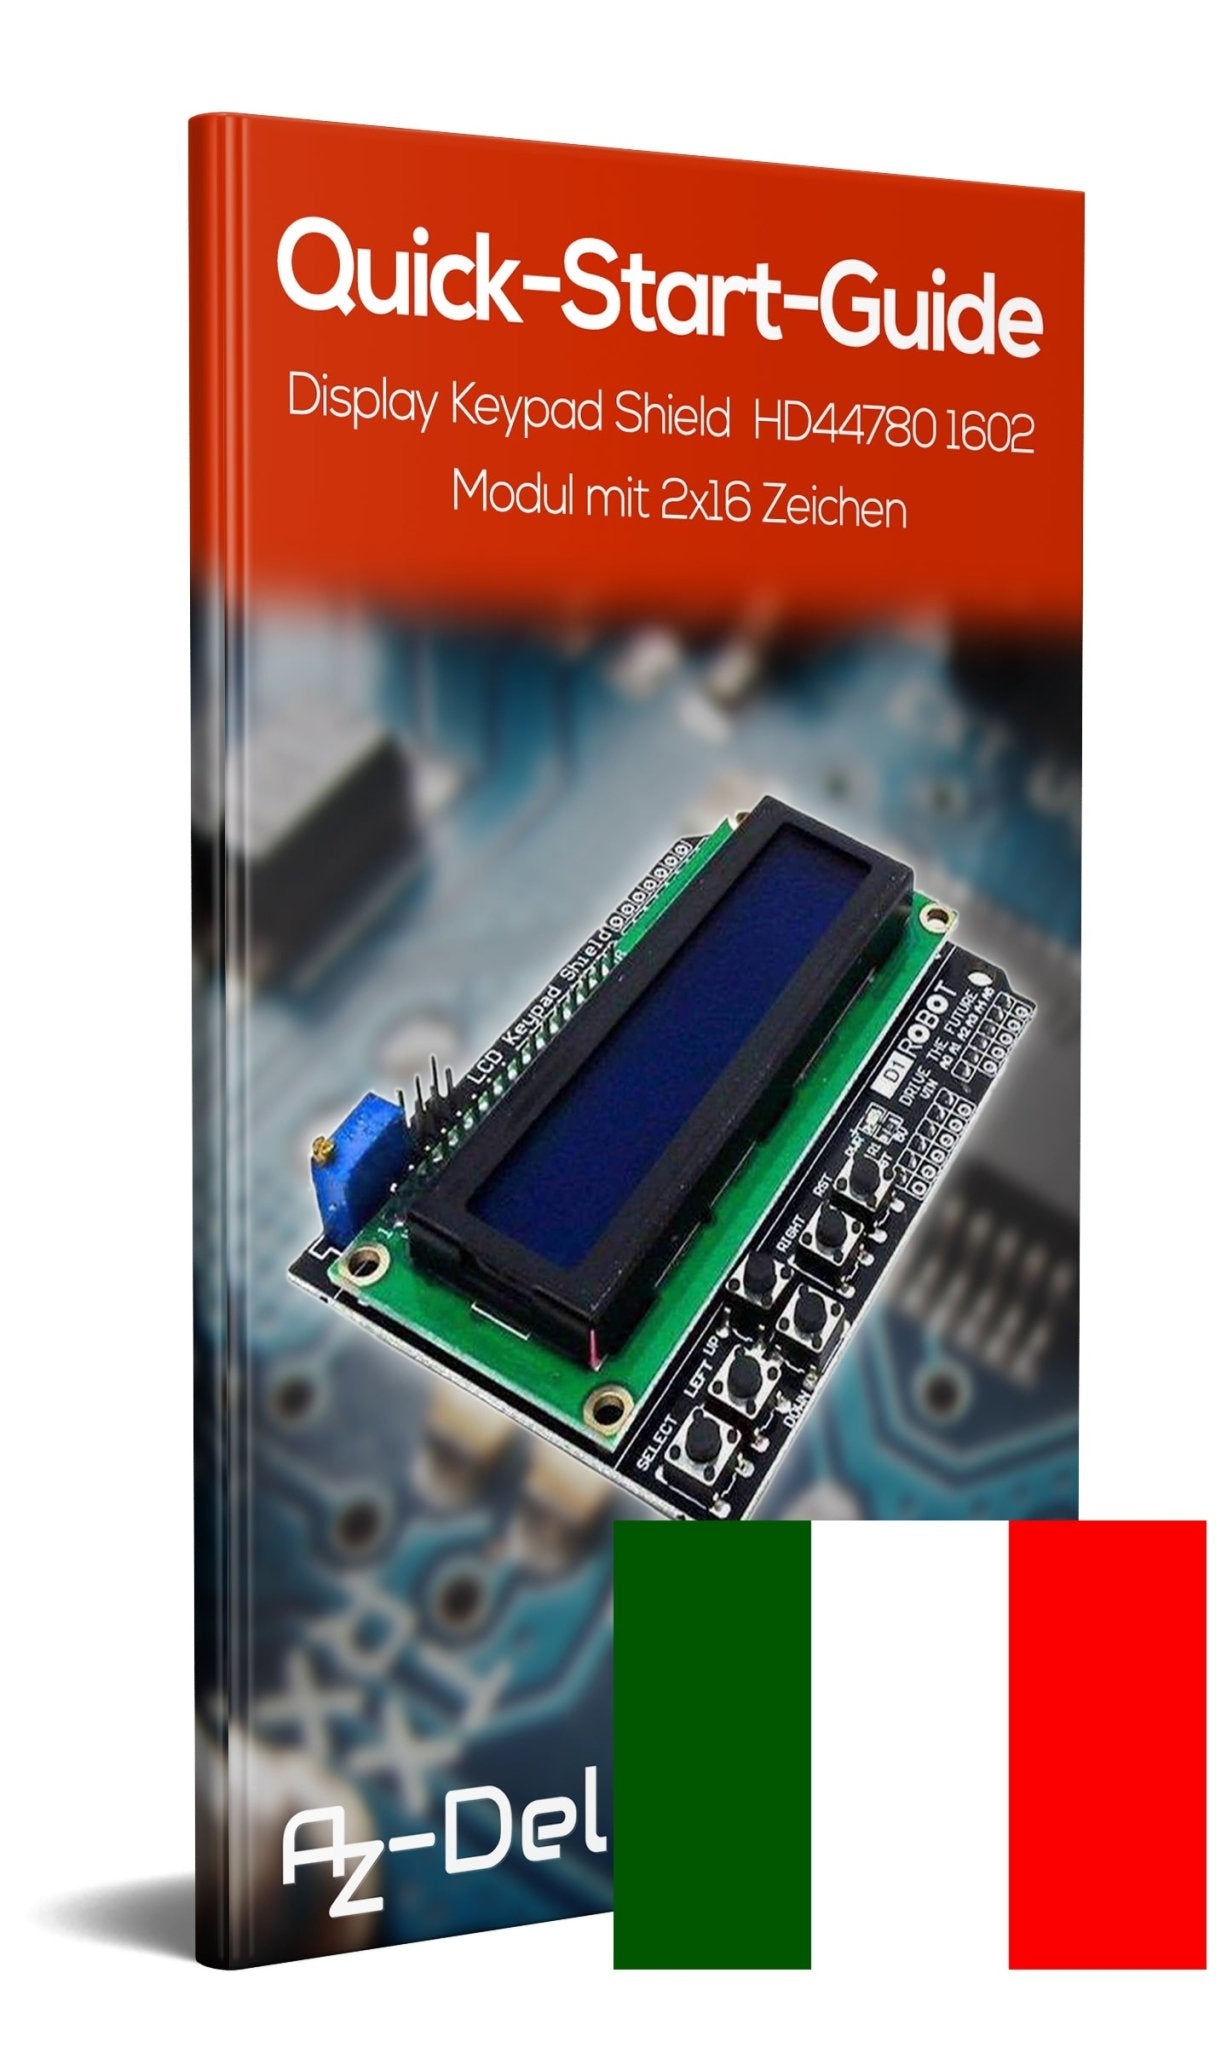 LCD1602 Display Keypad Shield HD44780 1602 Modul mit 2x16 Zeichen - AZ-Delivery